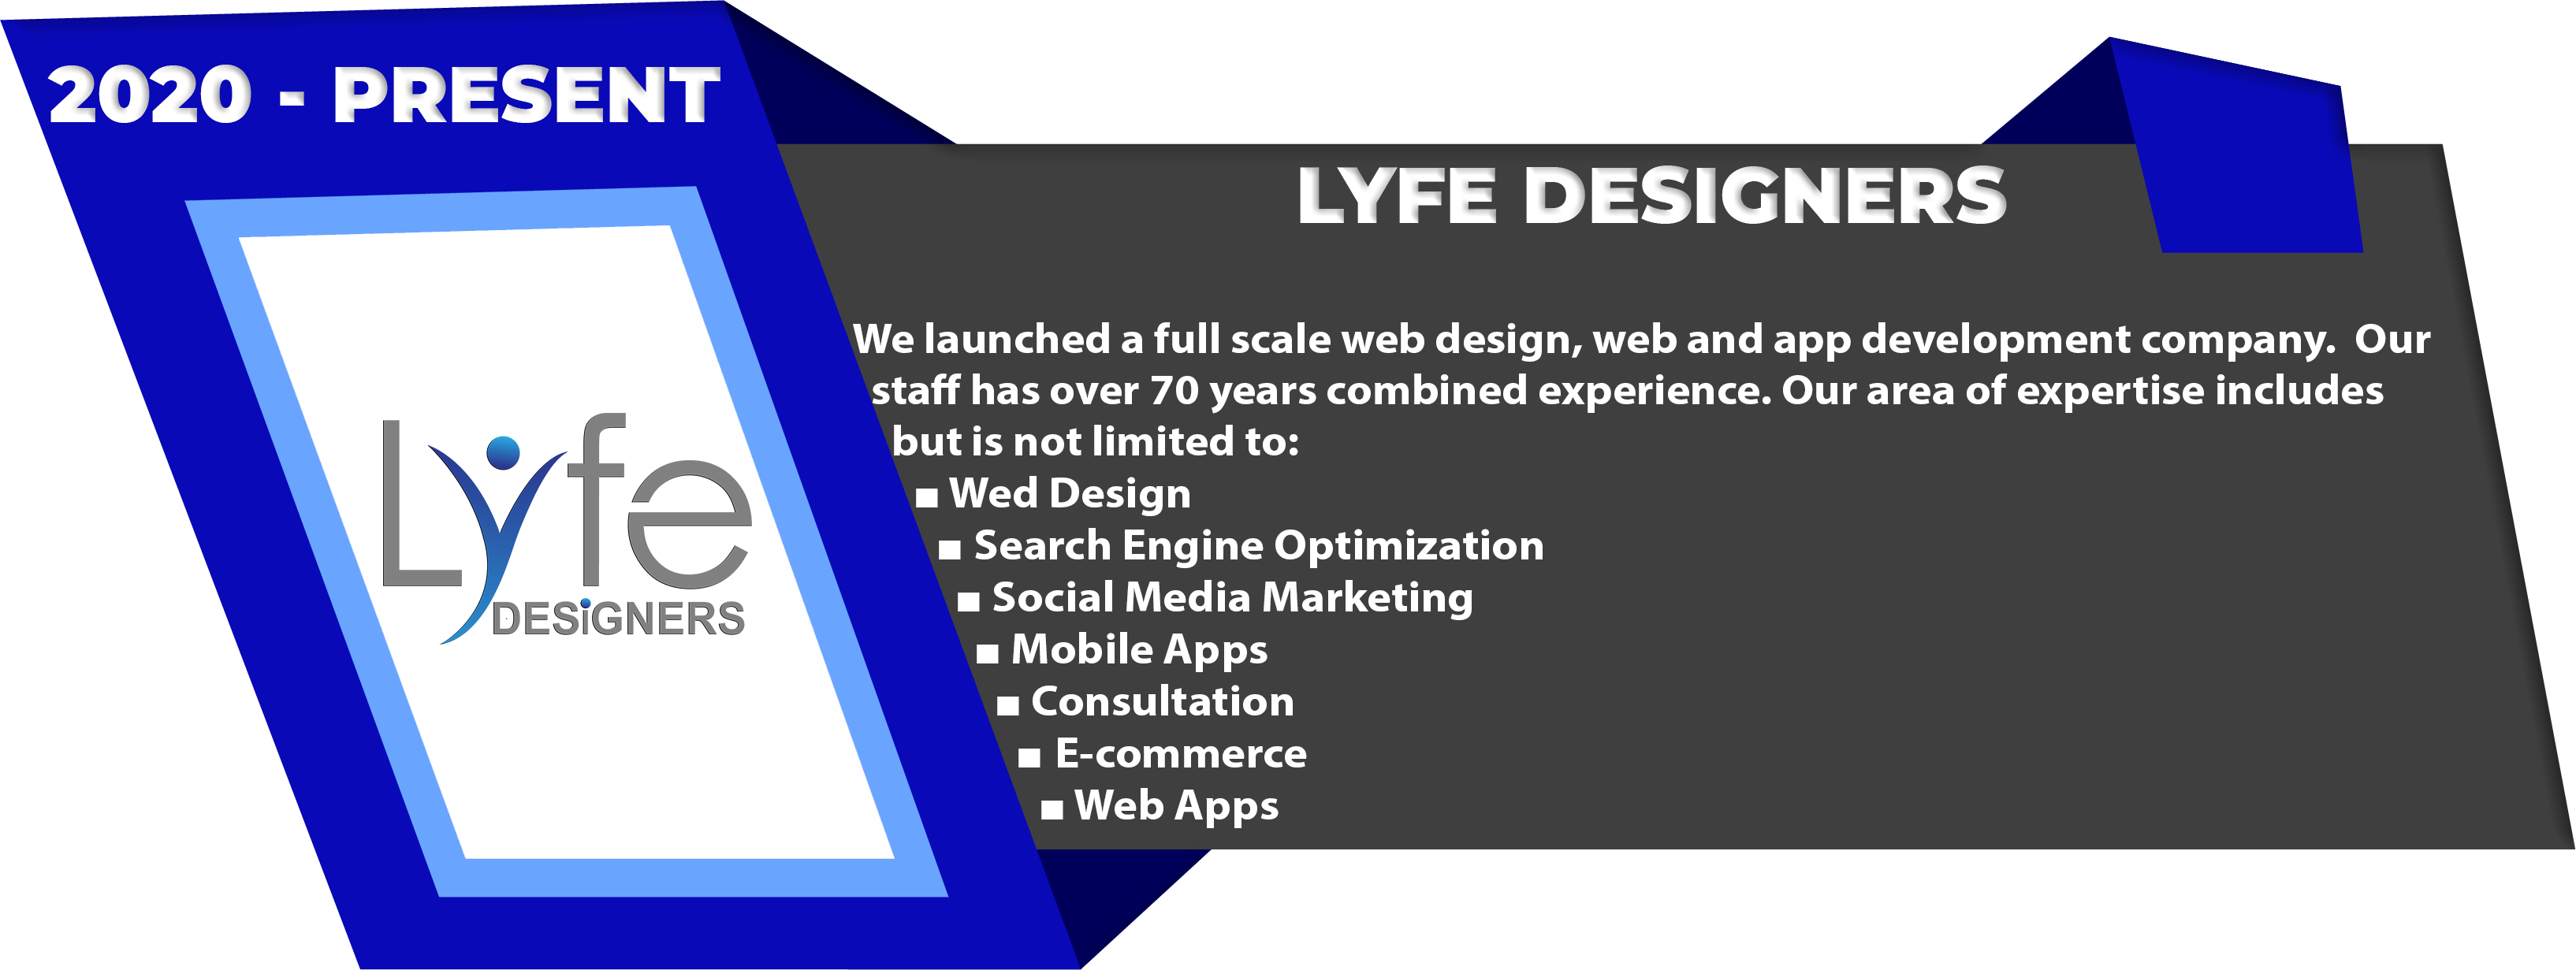 Lyfe-Designers-2020-2